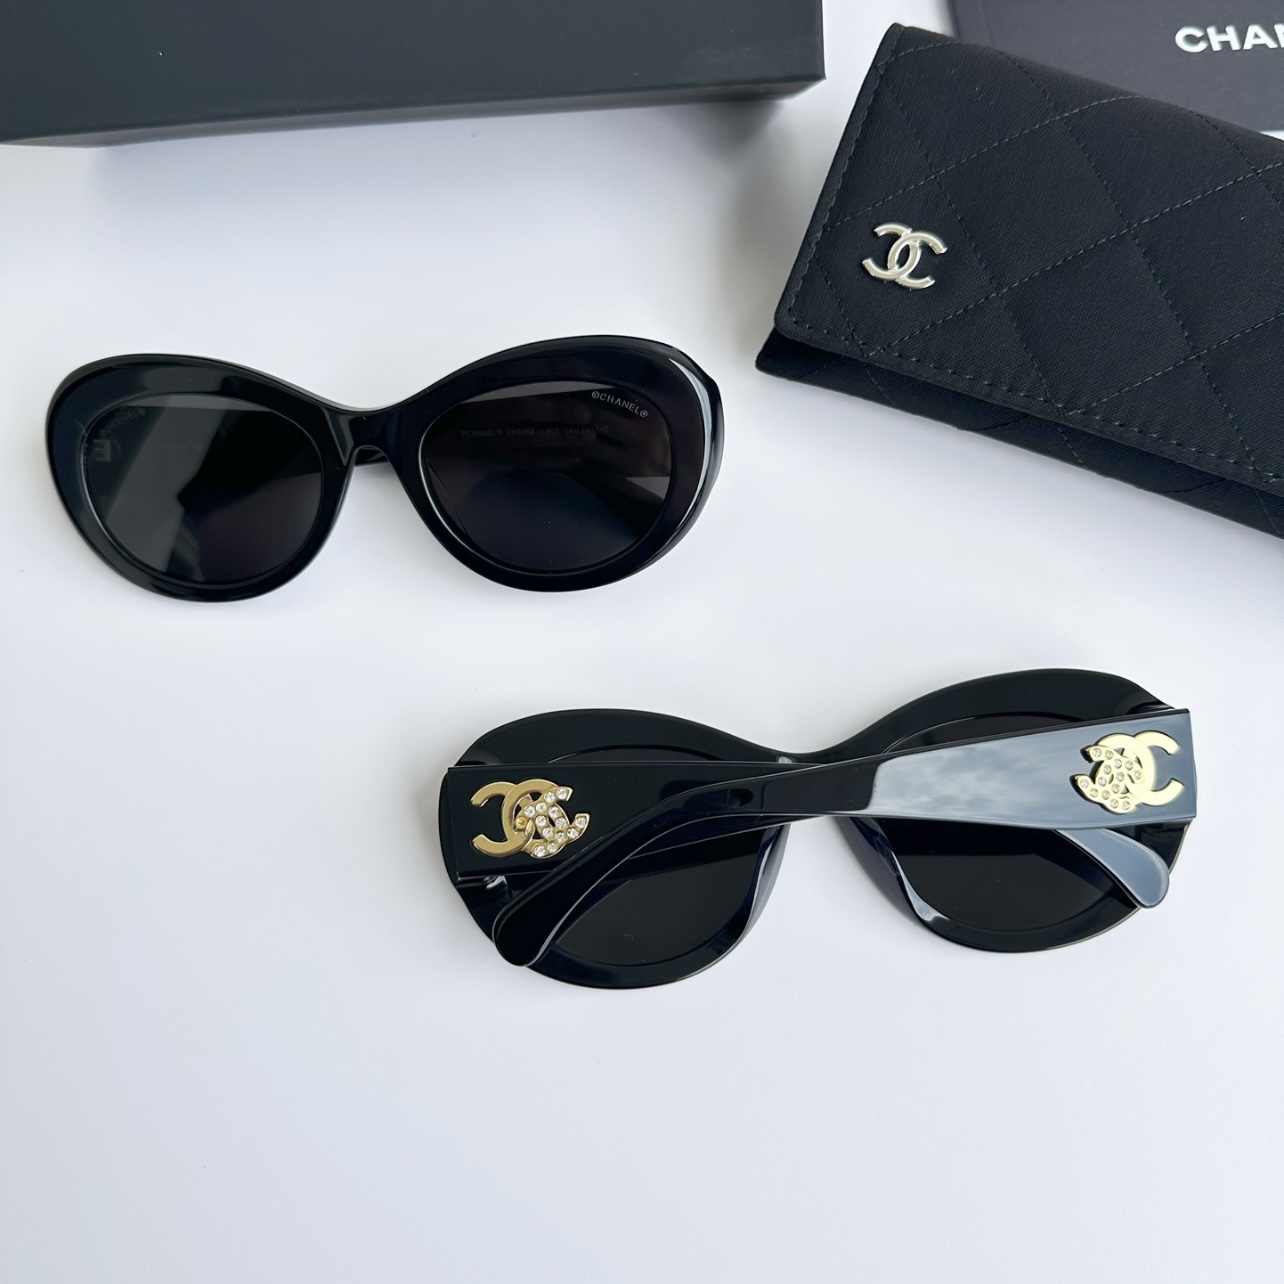 Chanel sunglasses - Jowellafashion